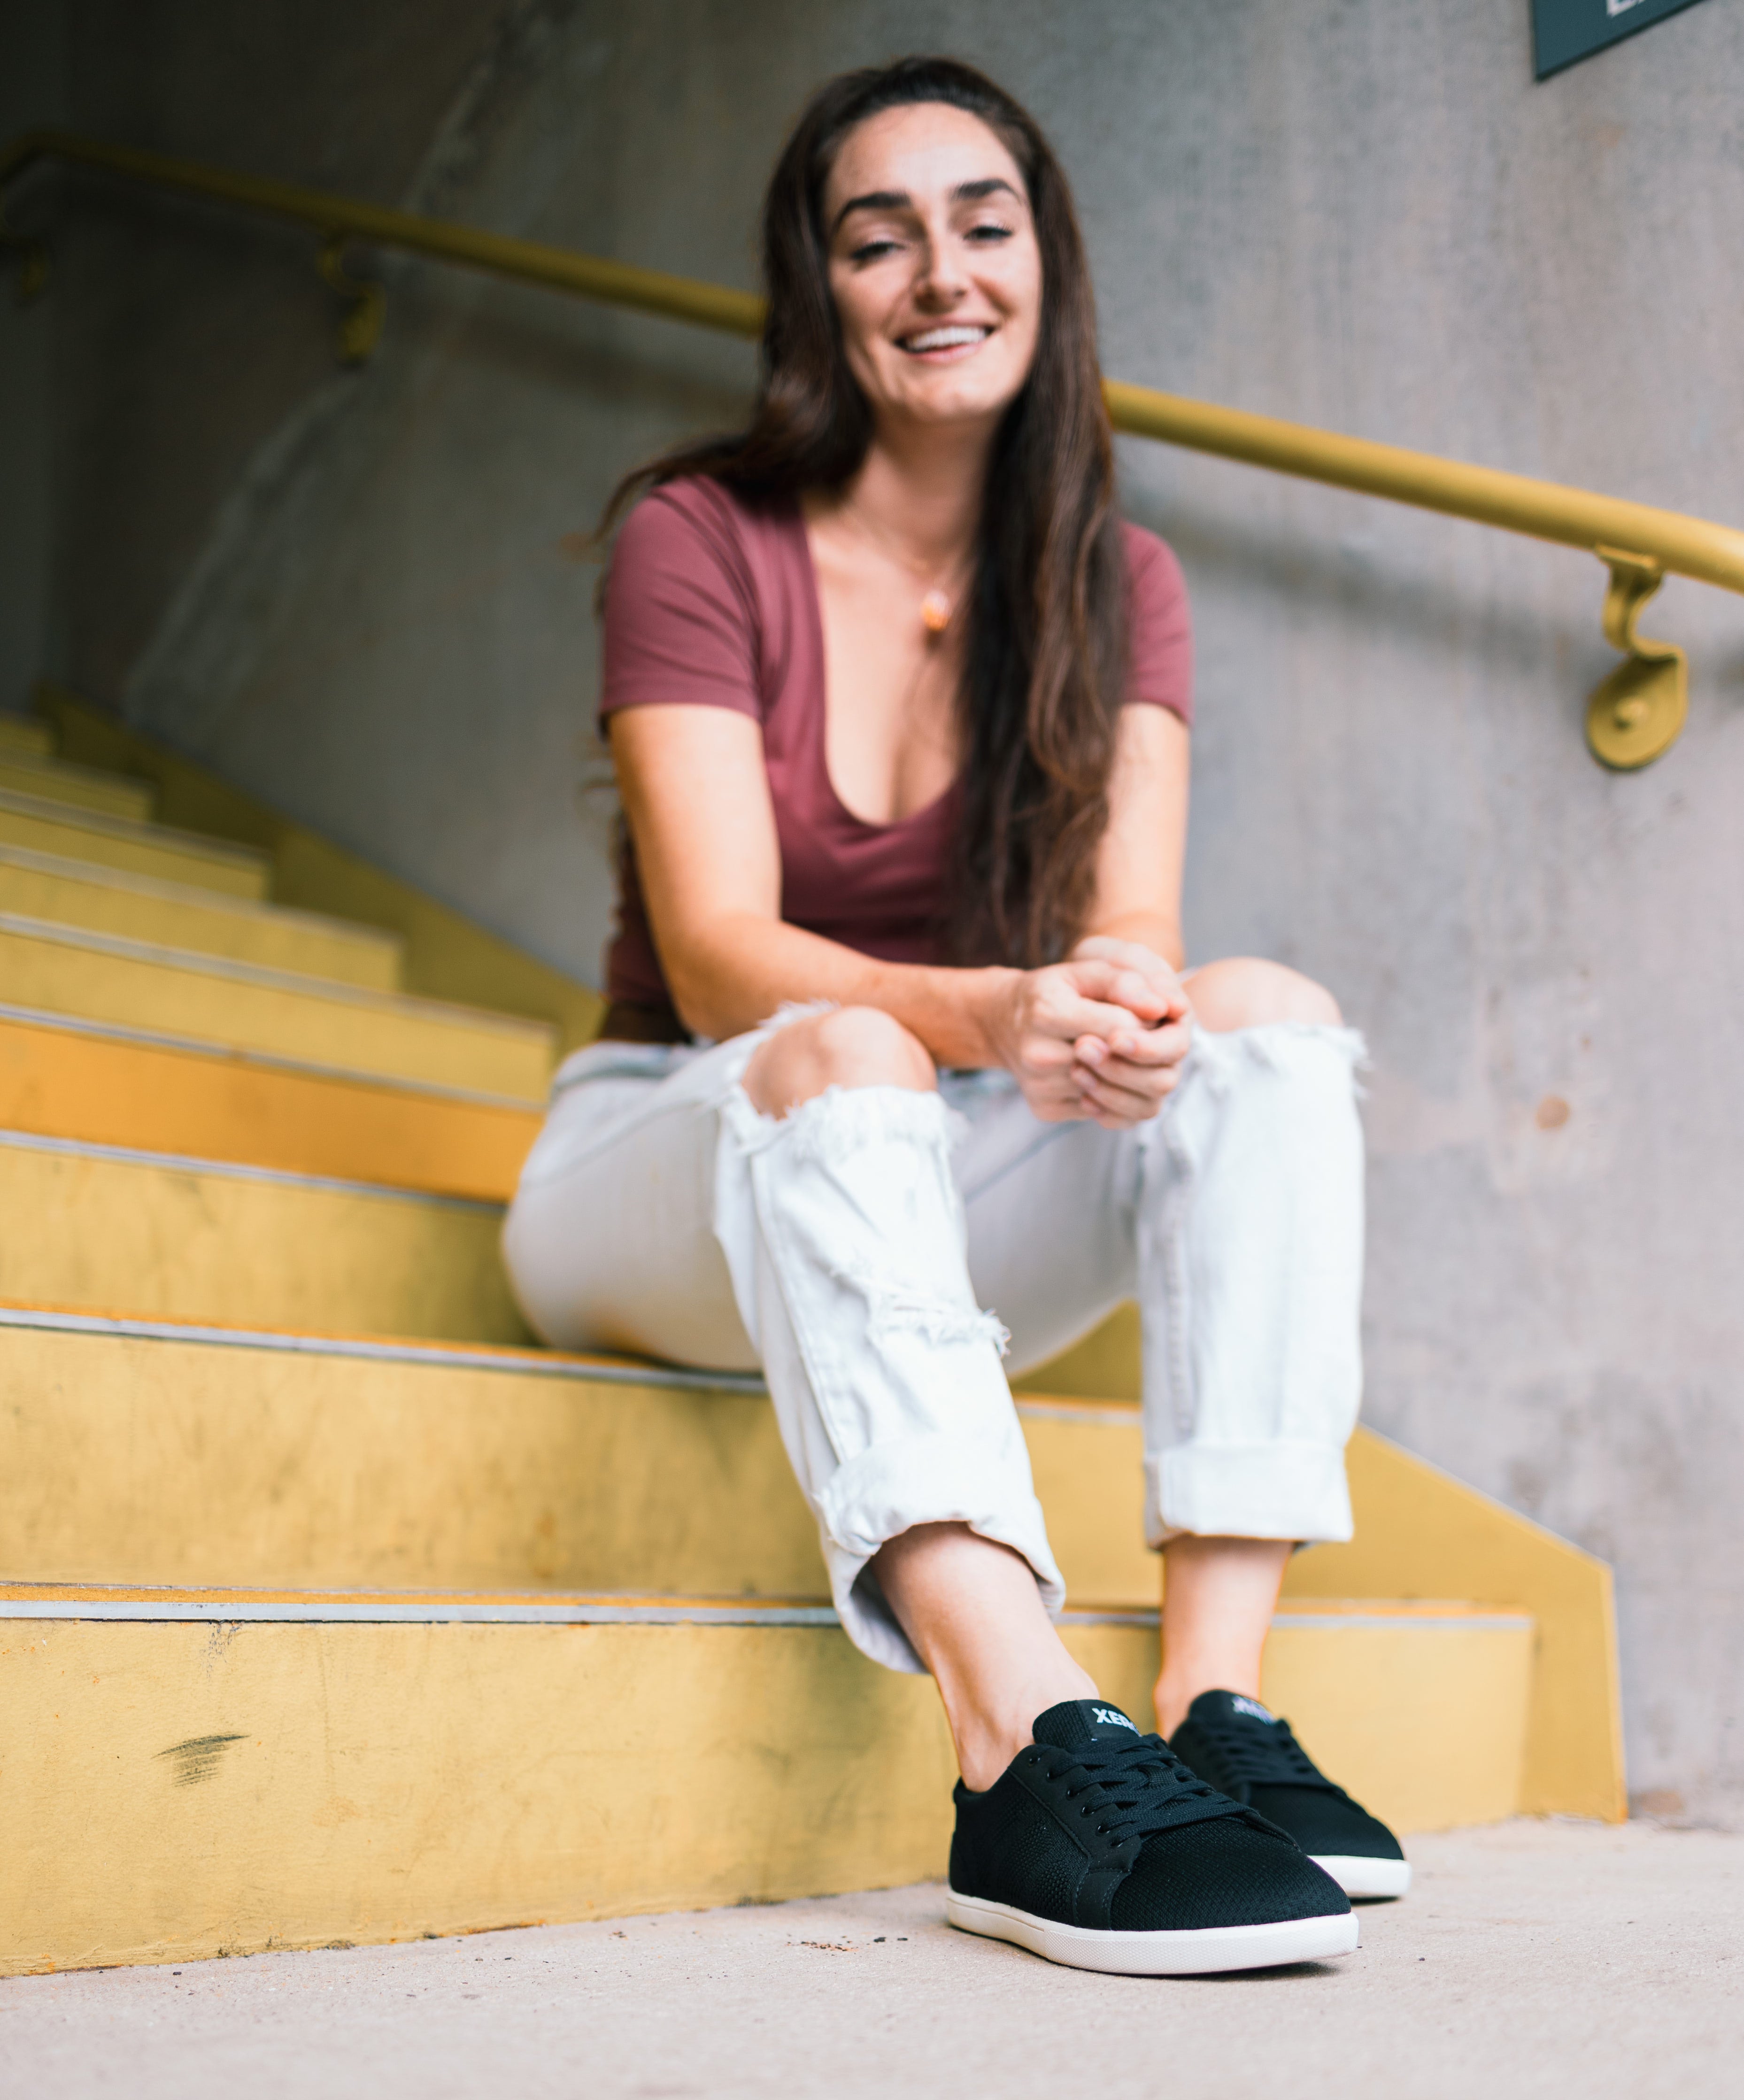 Xero Shoes Dillon Womens barfods sneakers til kvinder i farven black, lifestyle